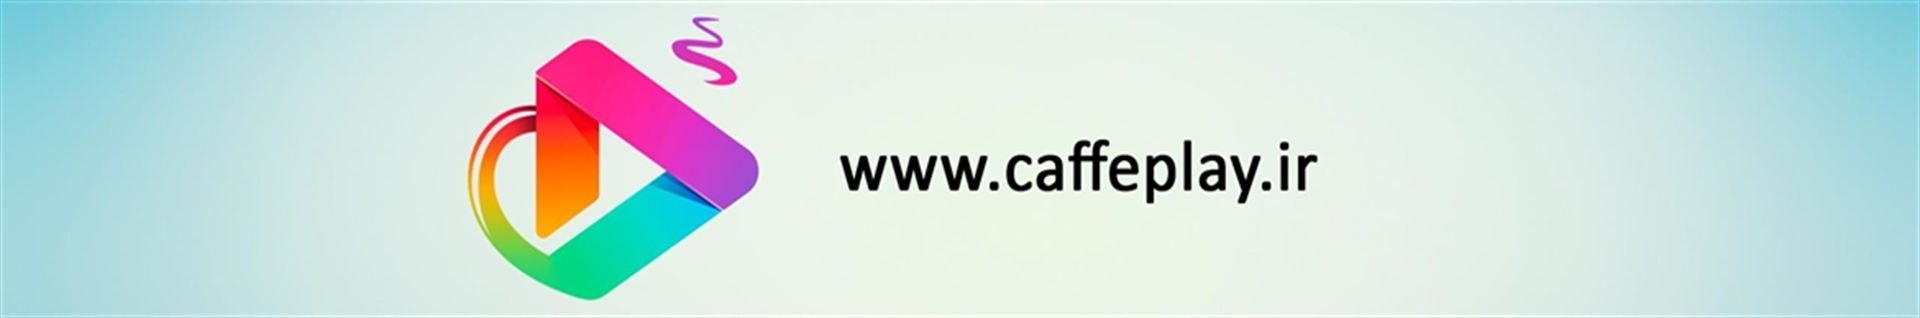 Caffeplay